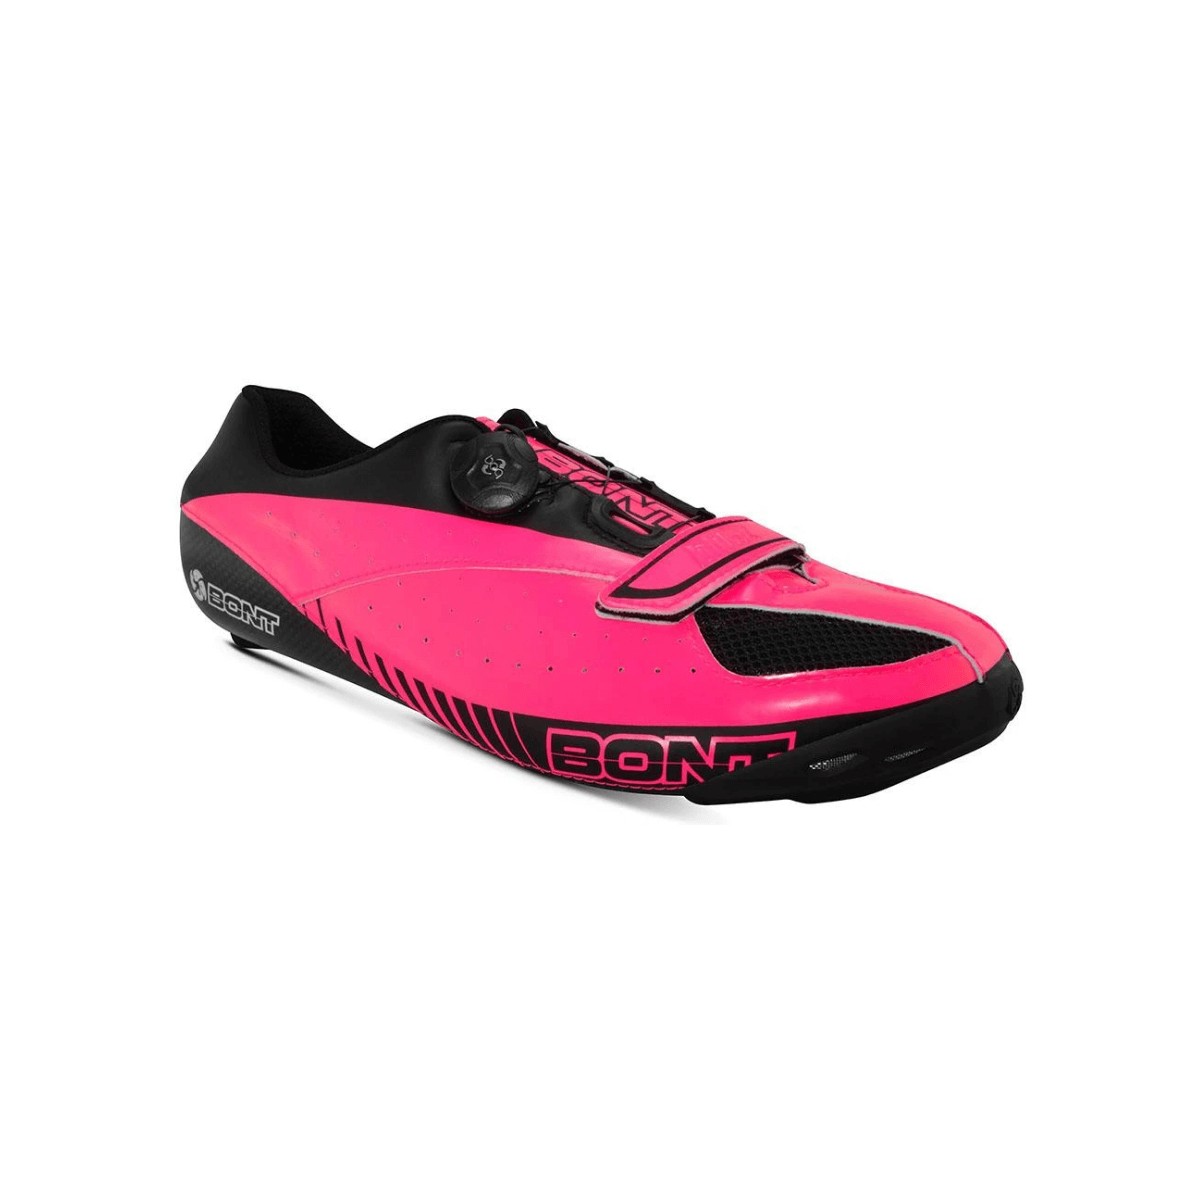 Bont Blitz Sneakers Pink Black, Size 37 - EUR